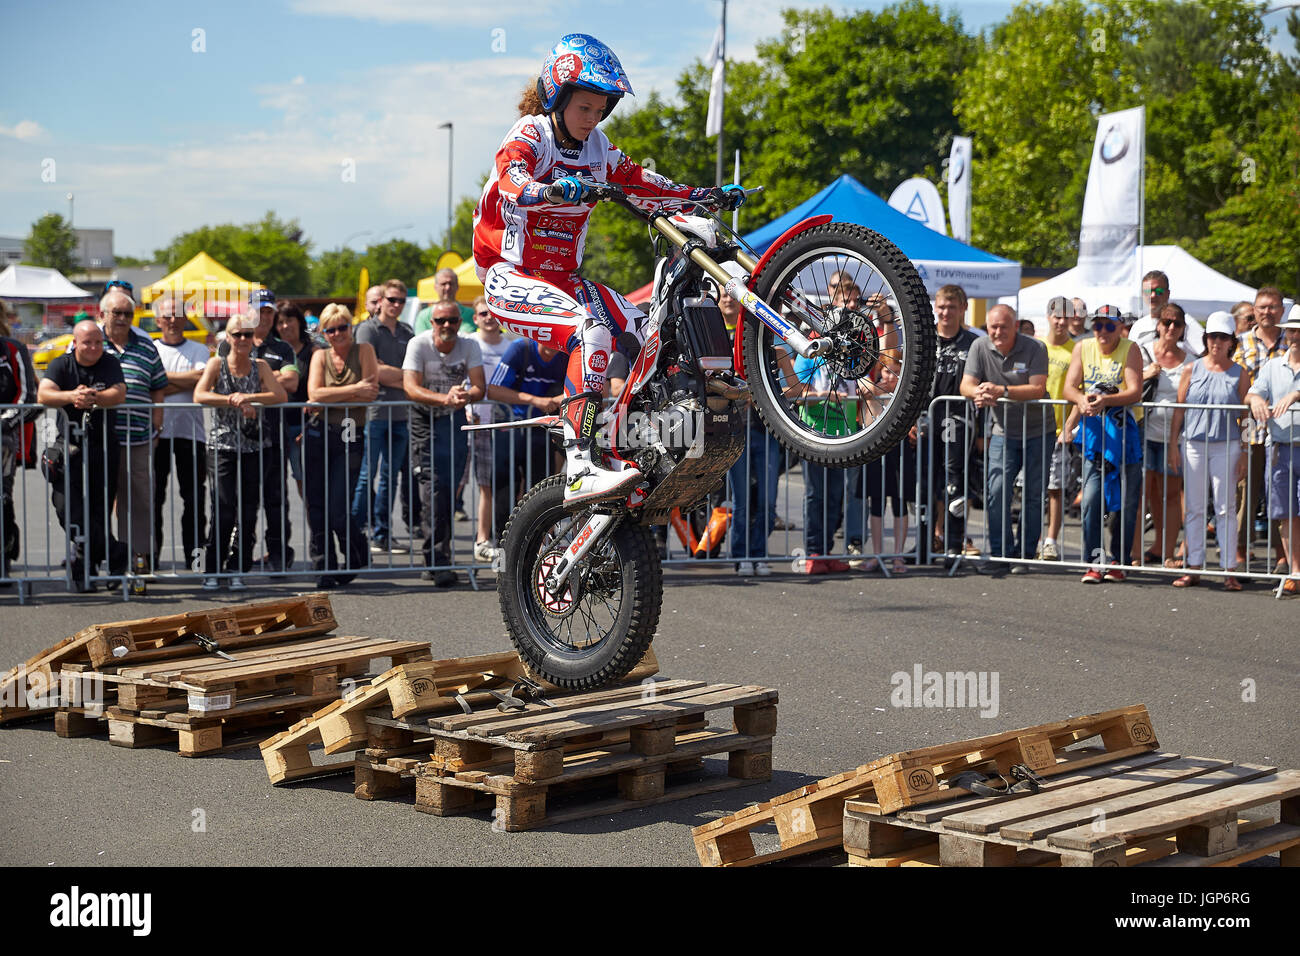 Theresa Bäuml, champion d'Europe 2016, moto trial la concurrence, Koblenz, Rhénanie-Palatinat, Allemagne Banque D'Images